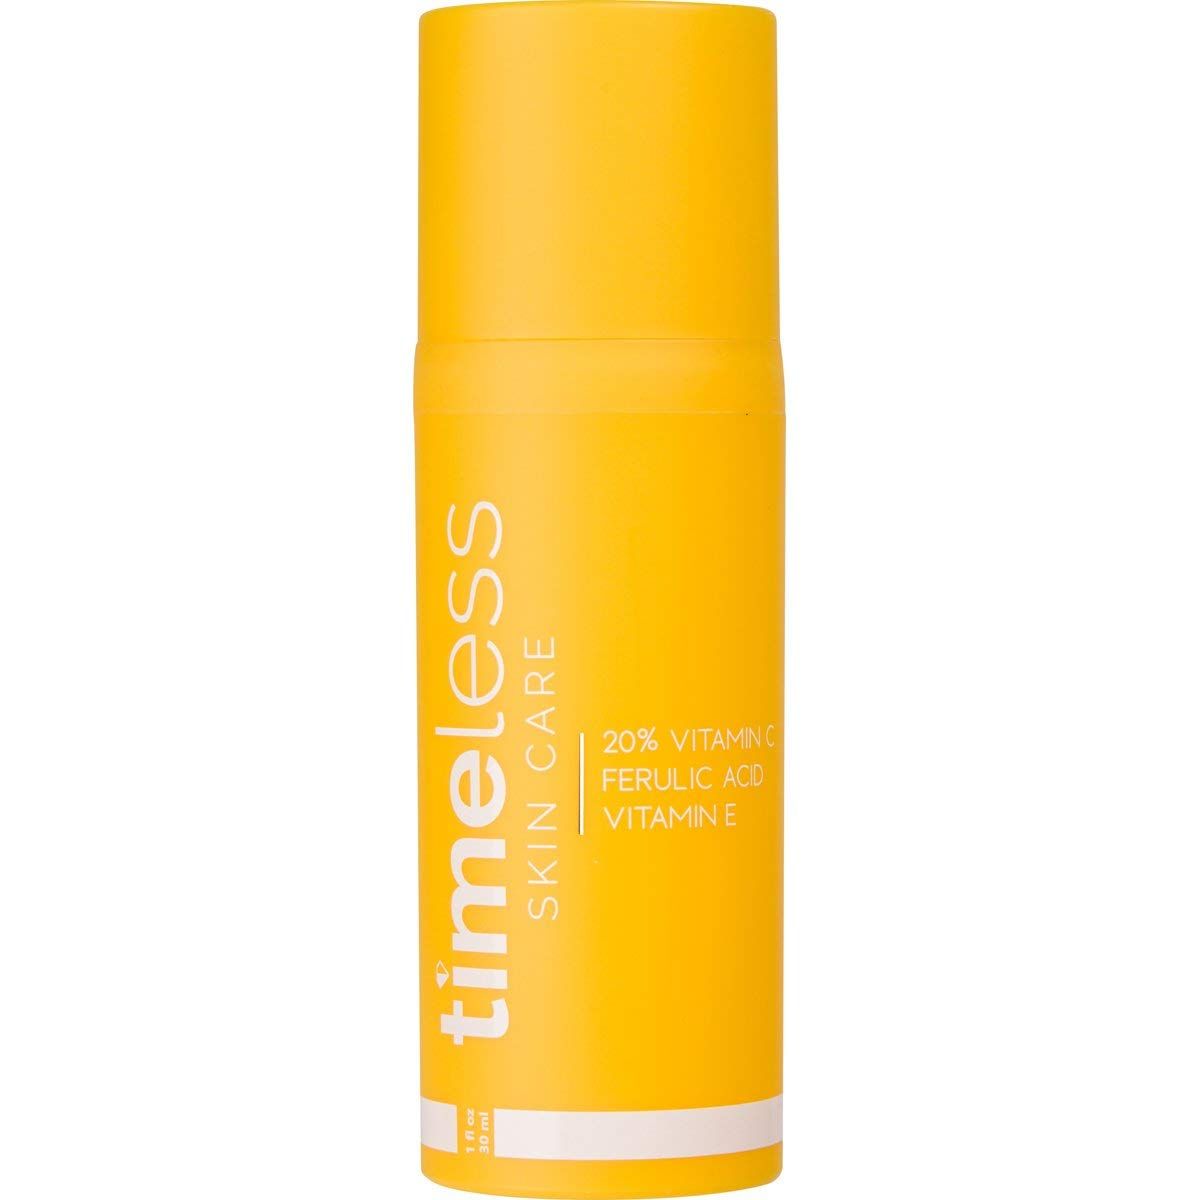 Timeless Skin Care 20% Vitamin C Plus E Ferulic Acid Serum, 1 oz by Timeless Skin Care | Amazon (US)